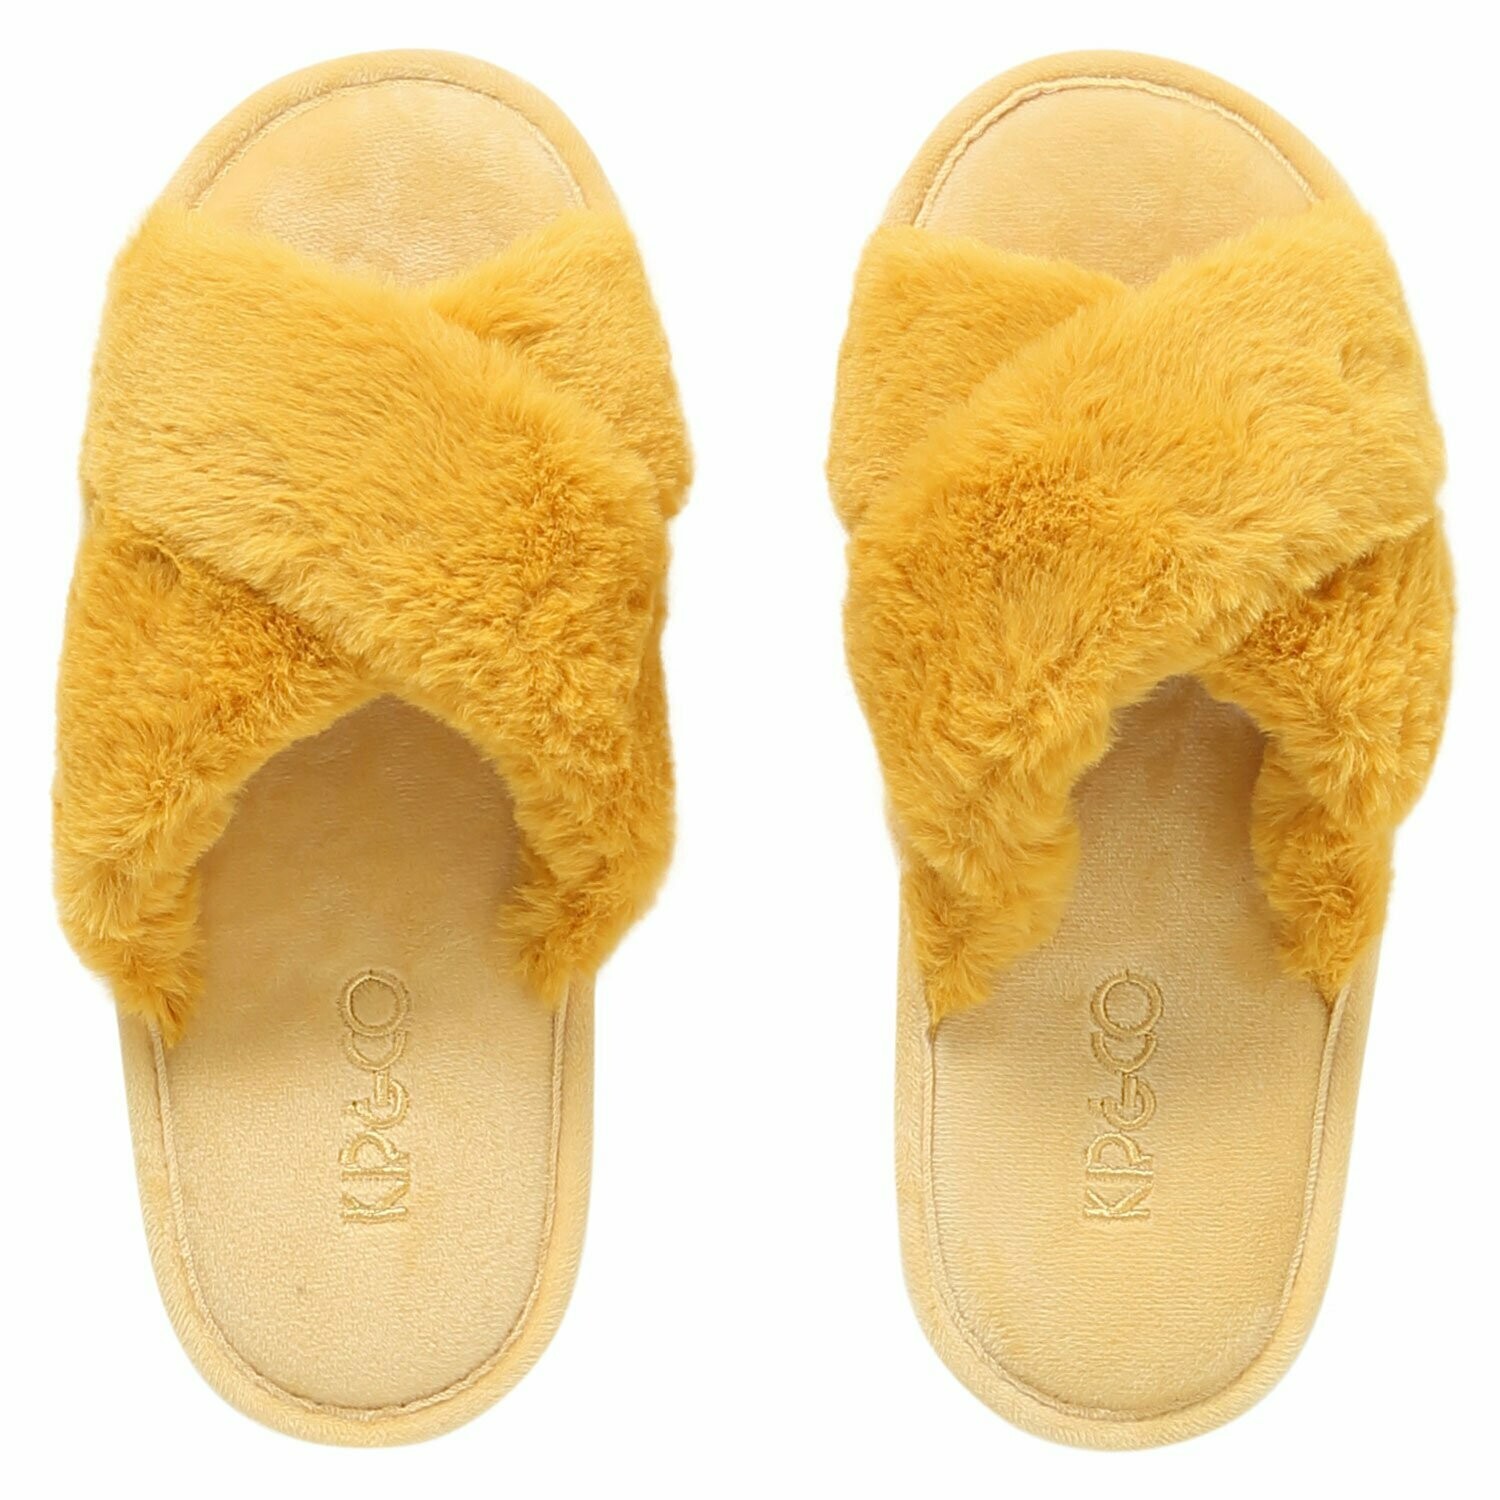 Adult Slippers - Sunshine Yellow - Size 35/36